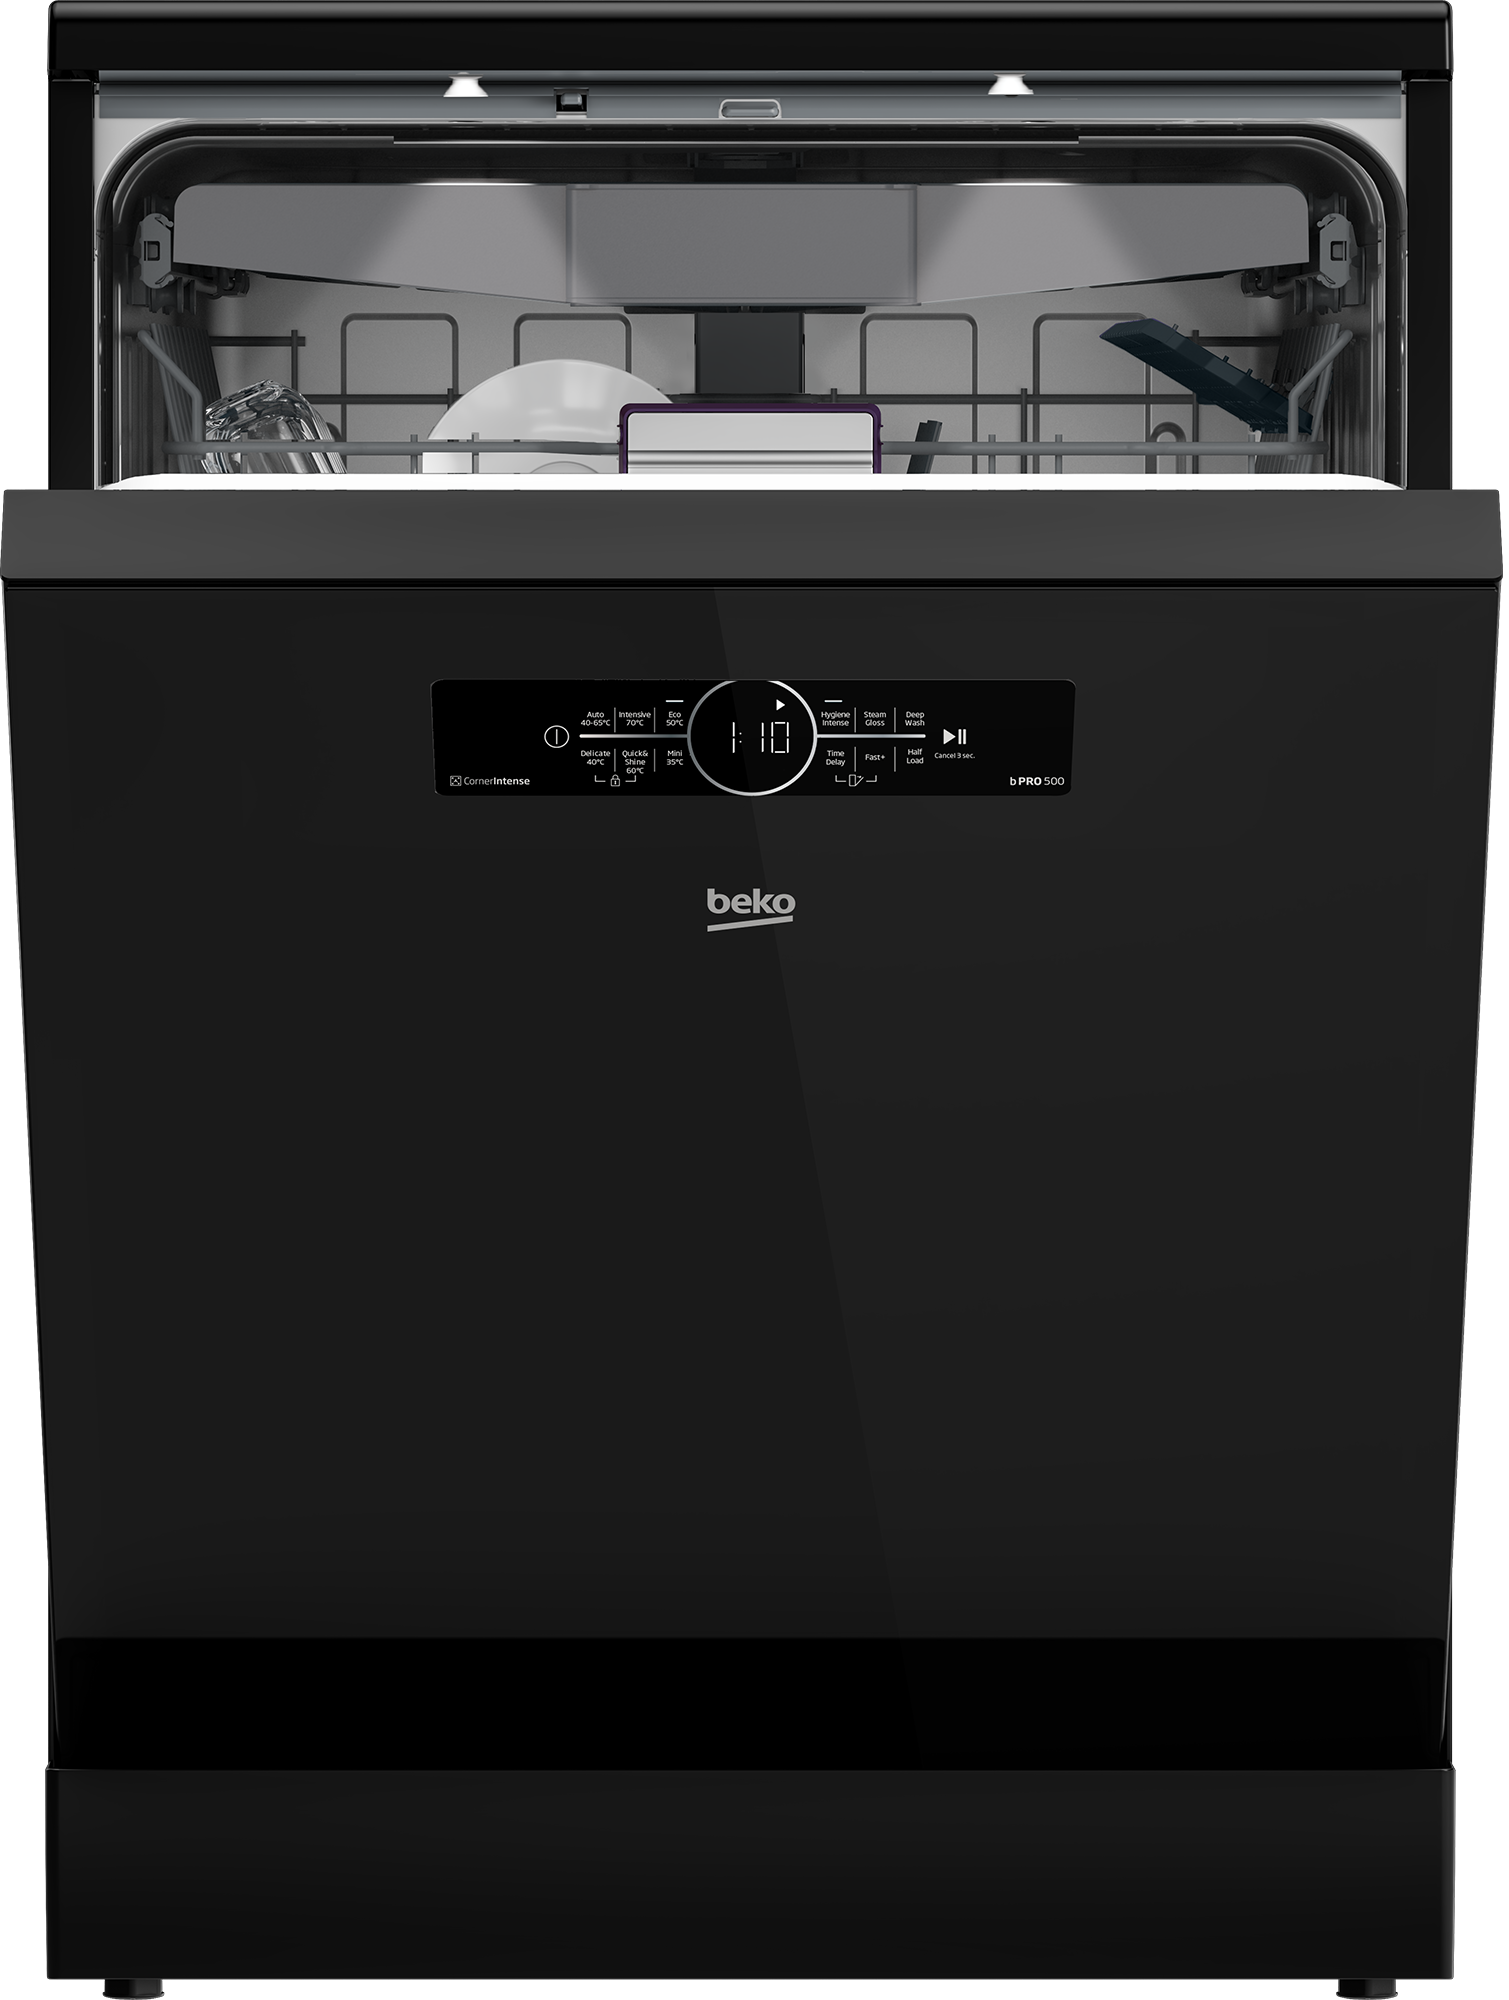 Beko bPRO 500 Digital Dishwasher, 15 Place Settings, 6 Programs, Black - BDFN36531GB